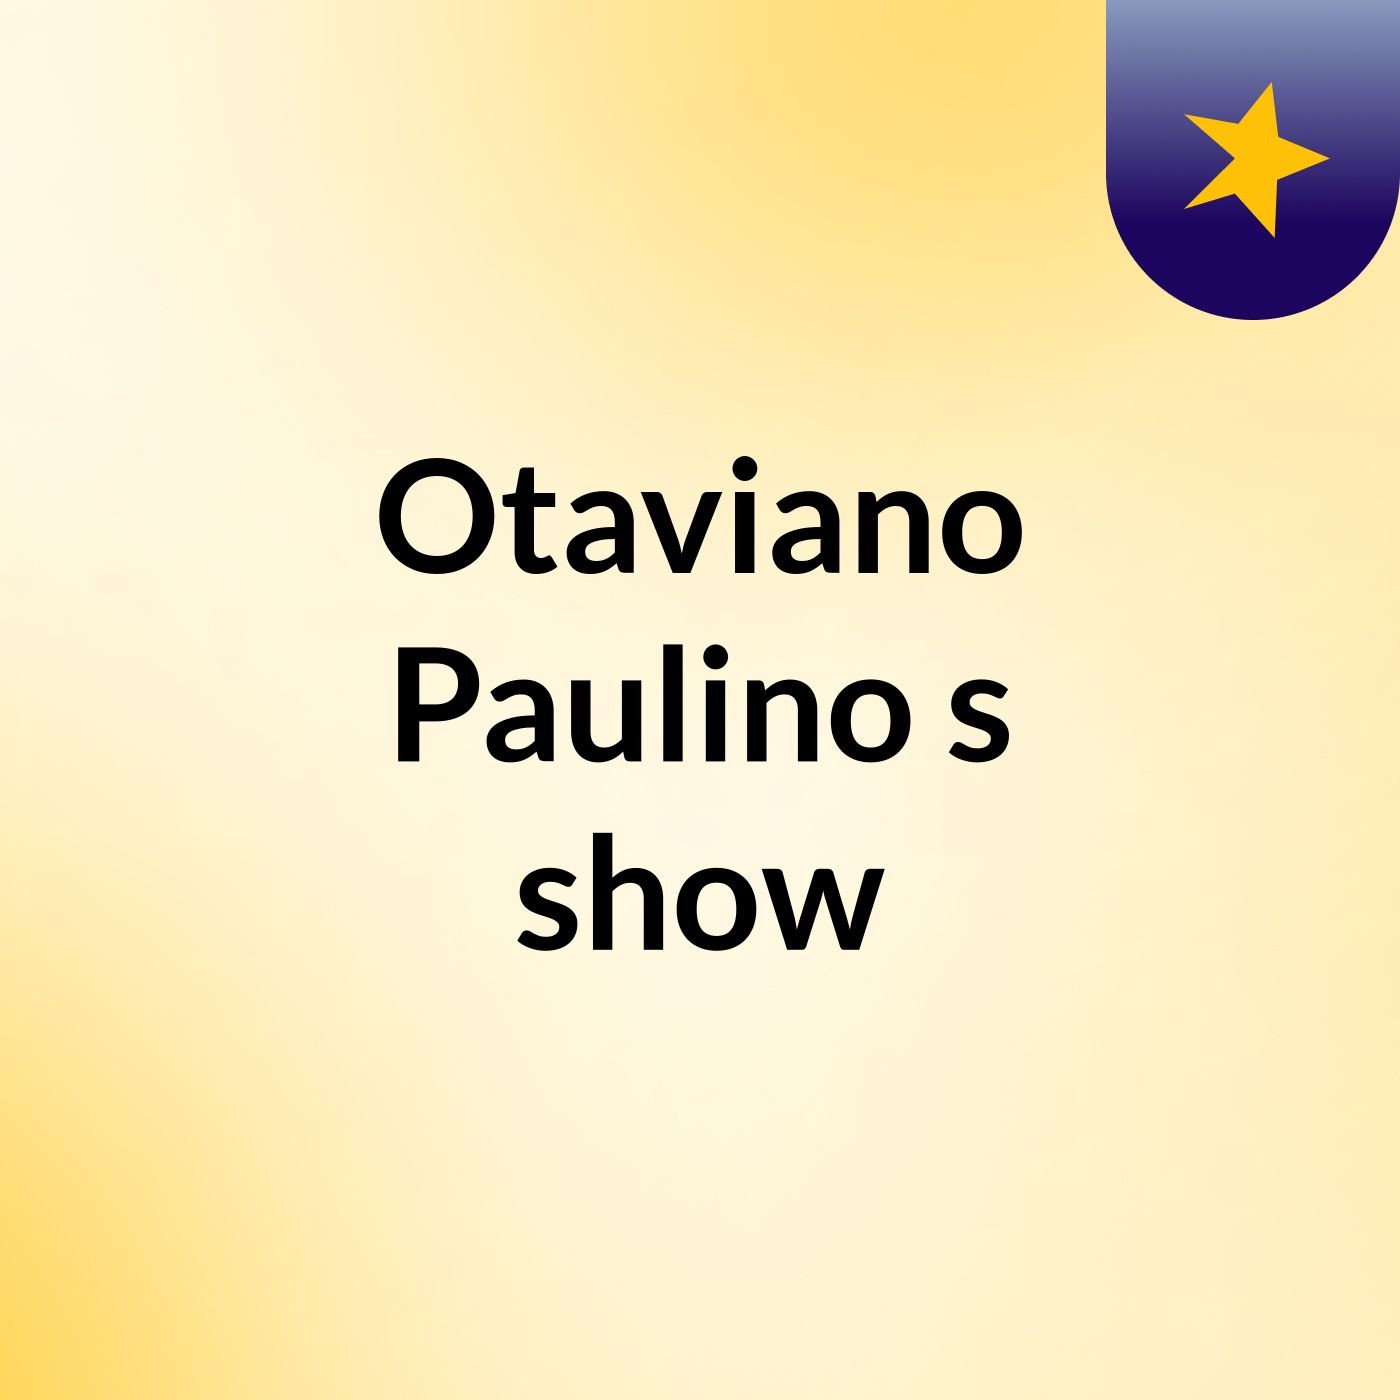 Episódio 44 - Otaviano Paulino's show